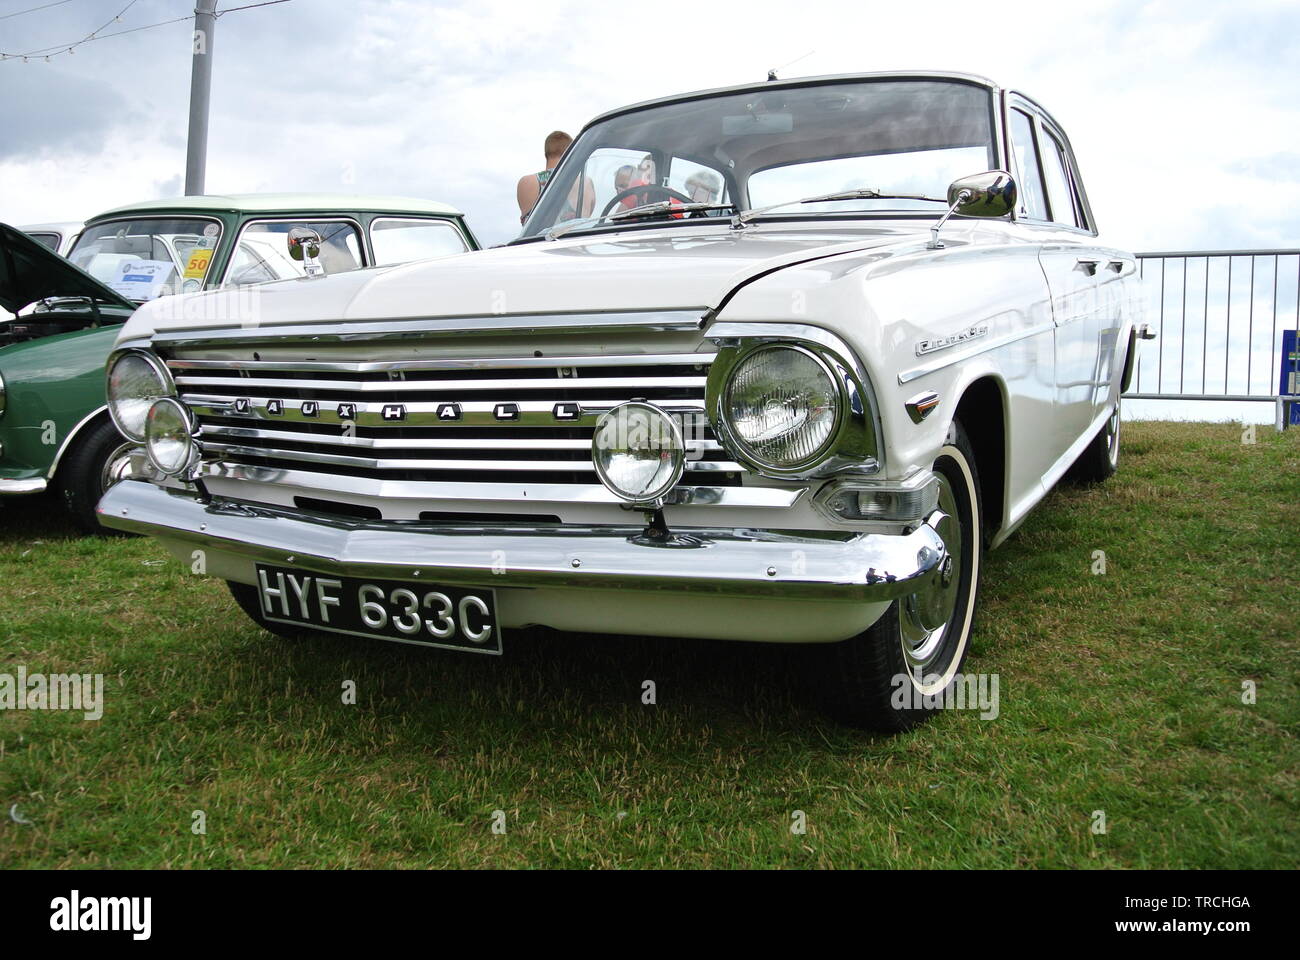 A 1965 Vauxhall Cresta car parked up at Riviera classic car show, Paignton, Devon, England. UK. Stock Photo